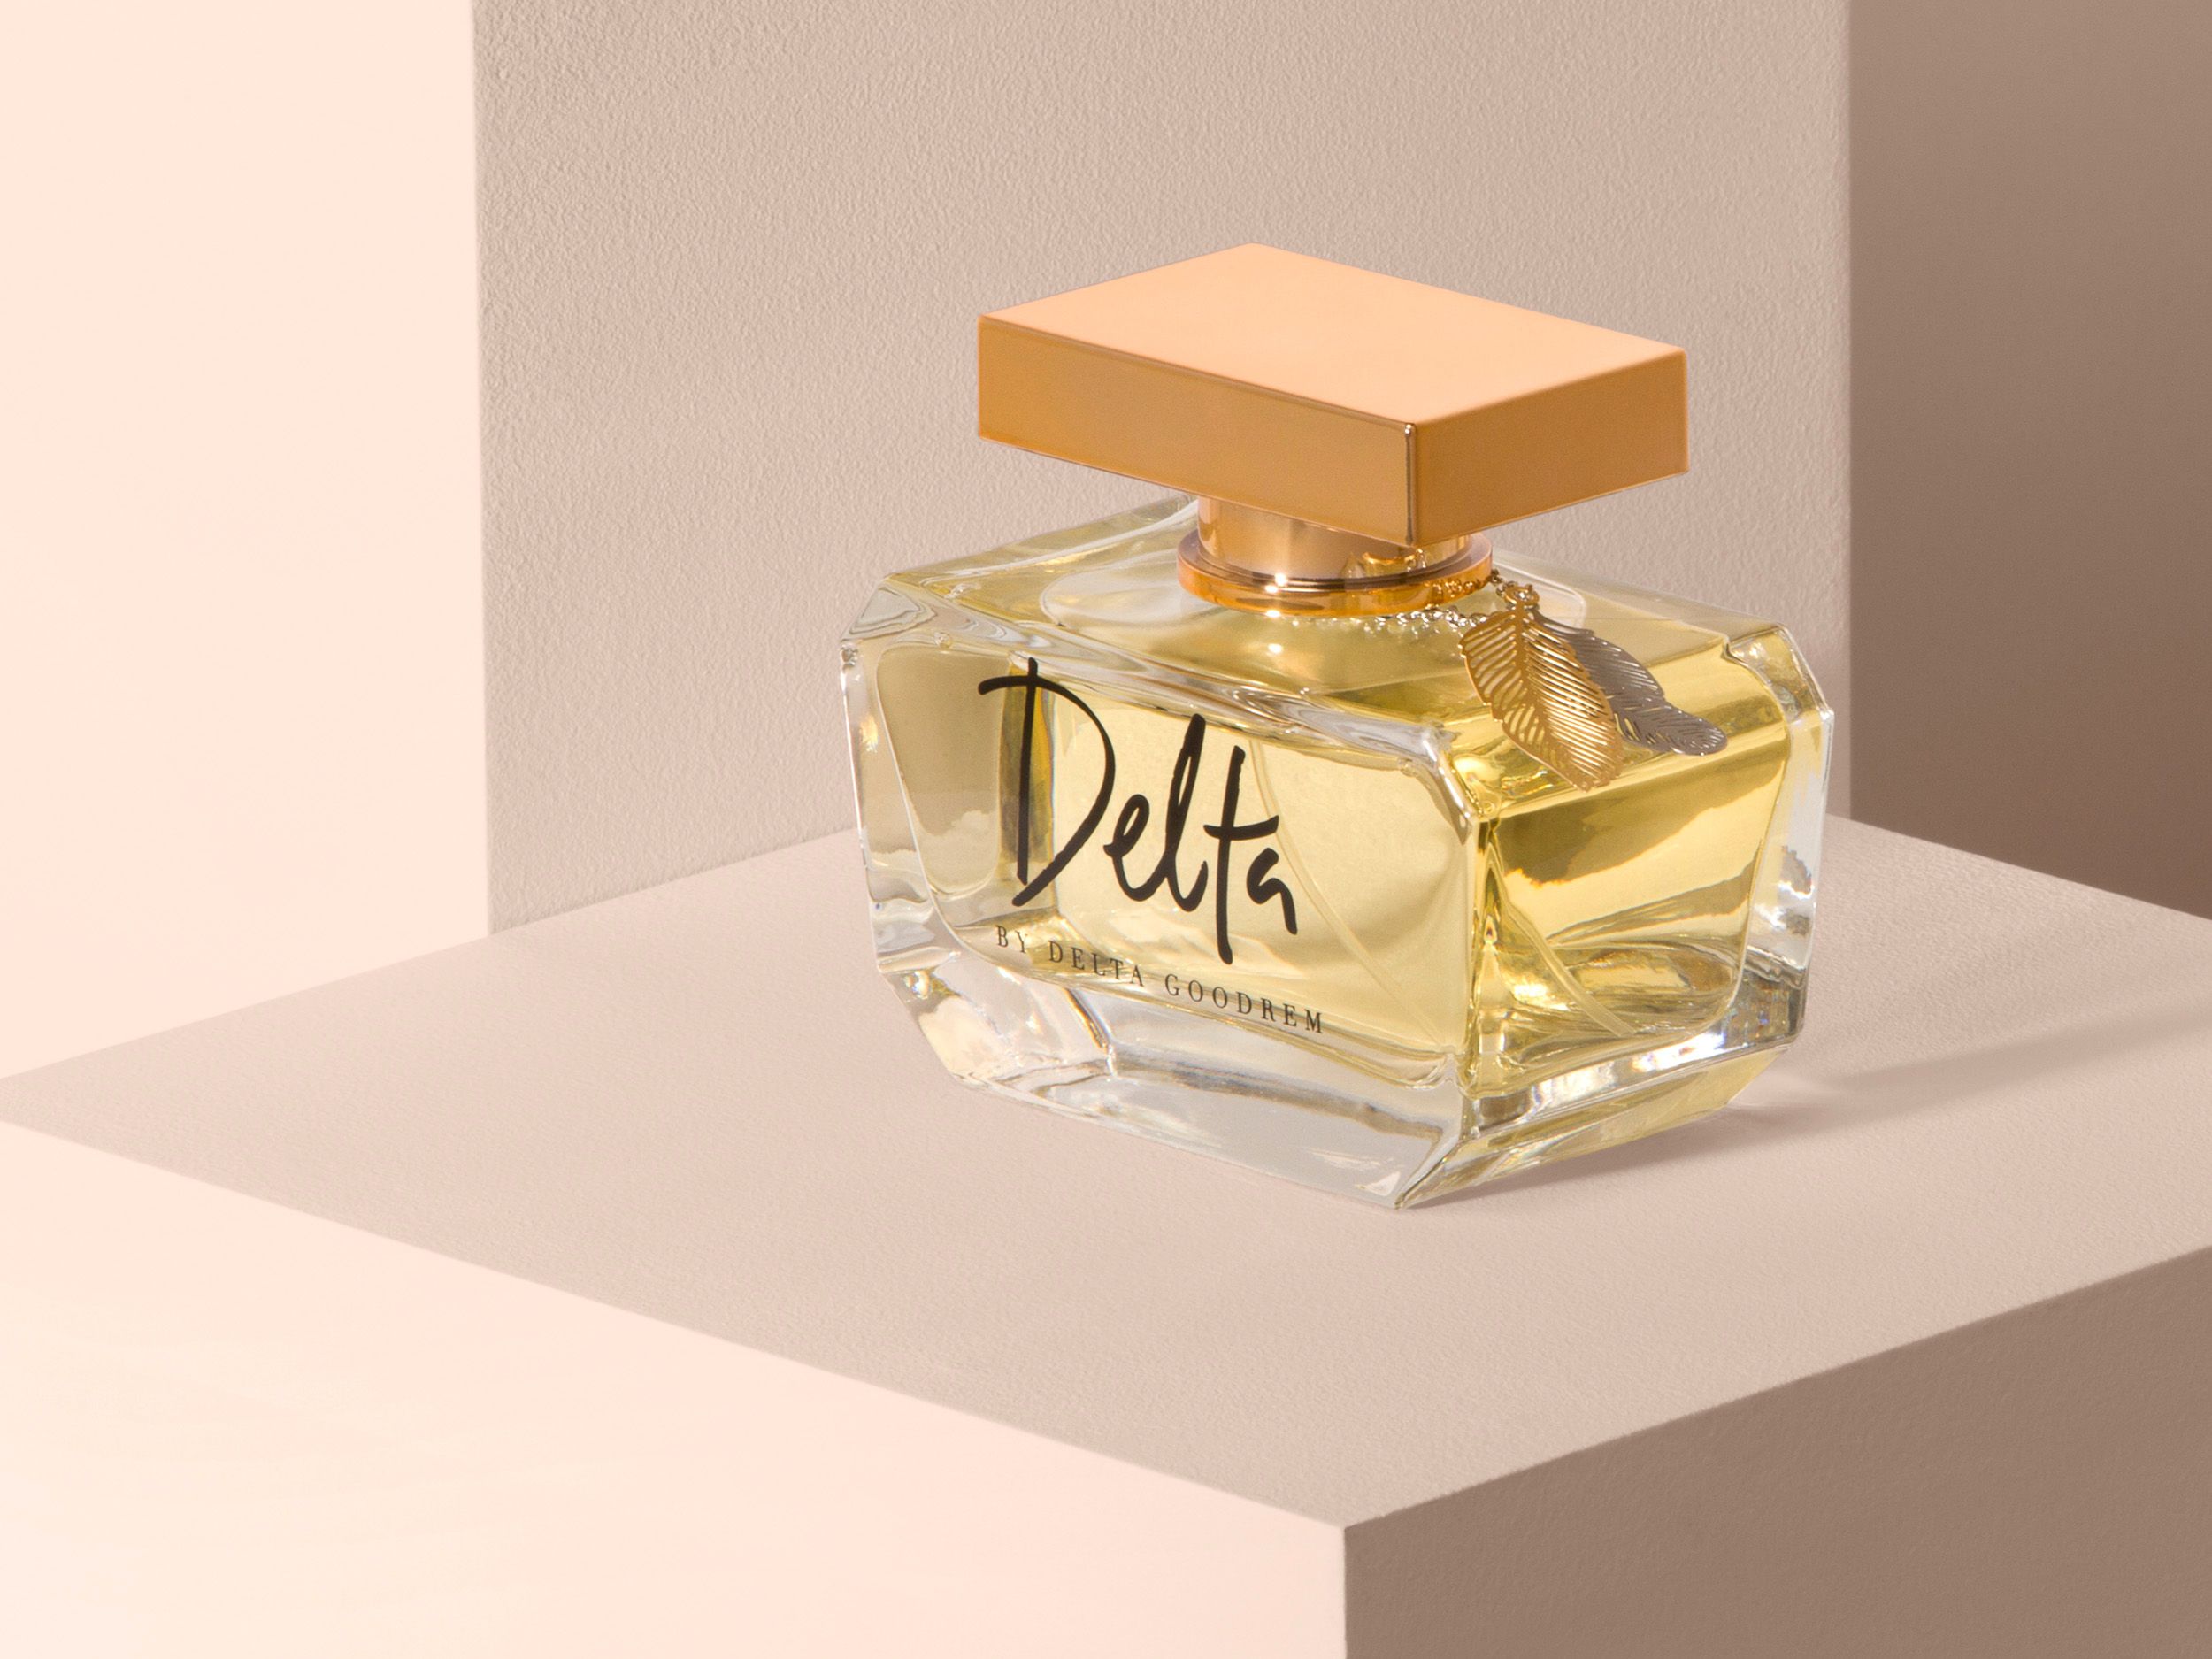 Delta by Delta Goodrem Date Of Birth Design Branding Packaging